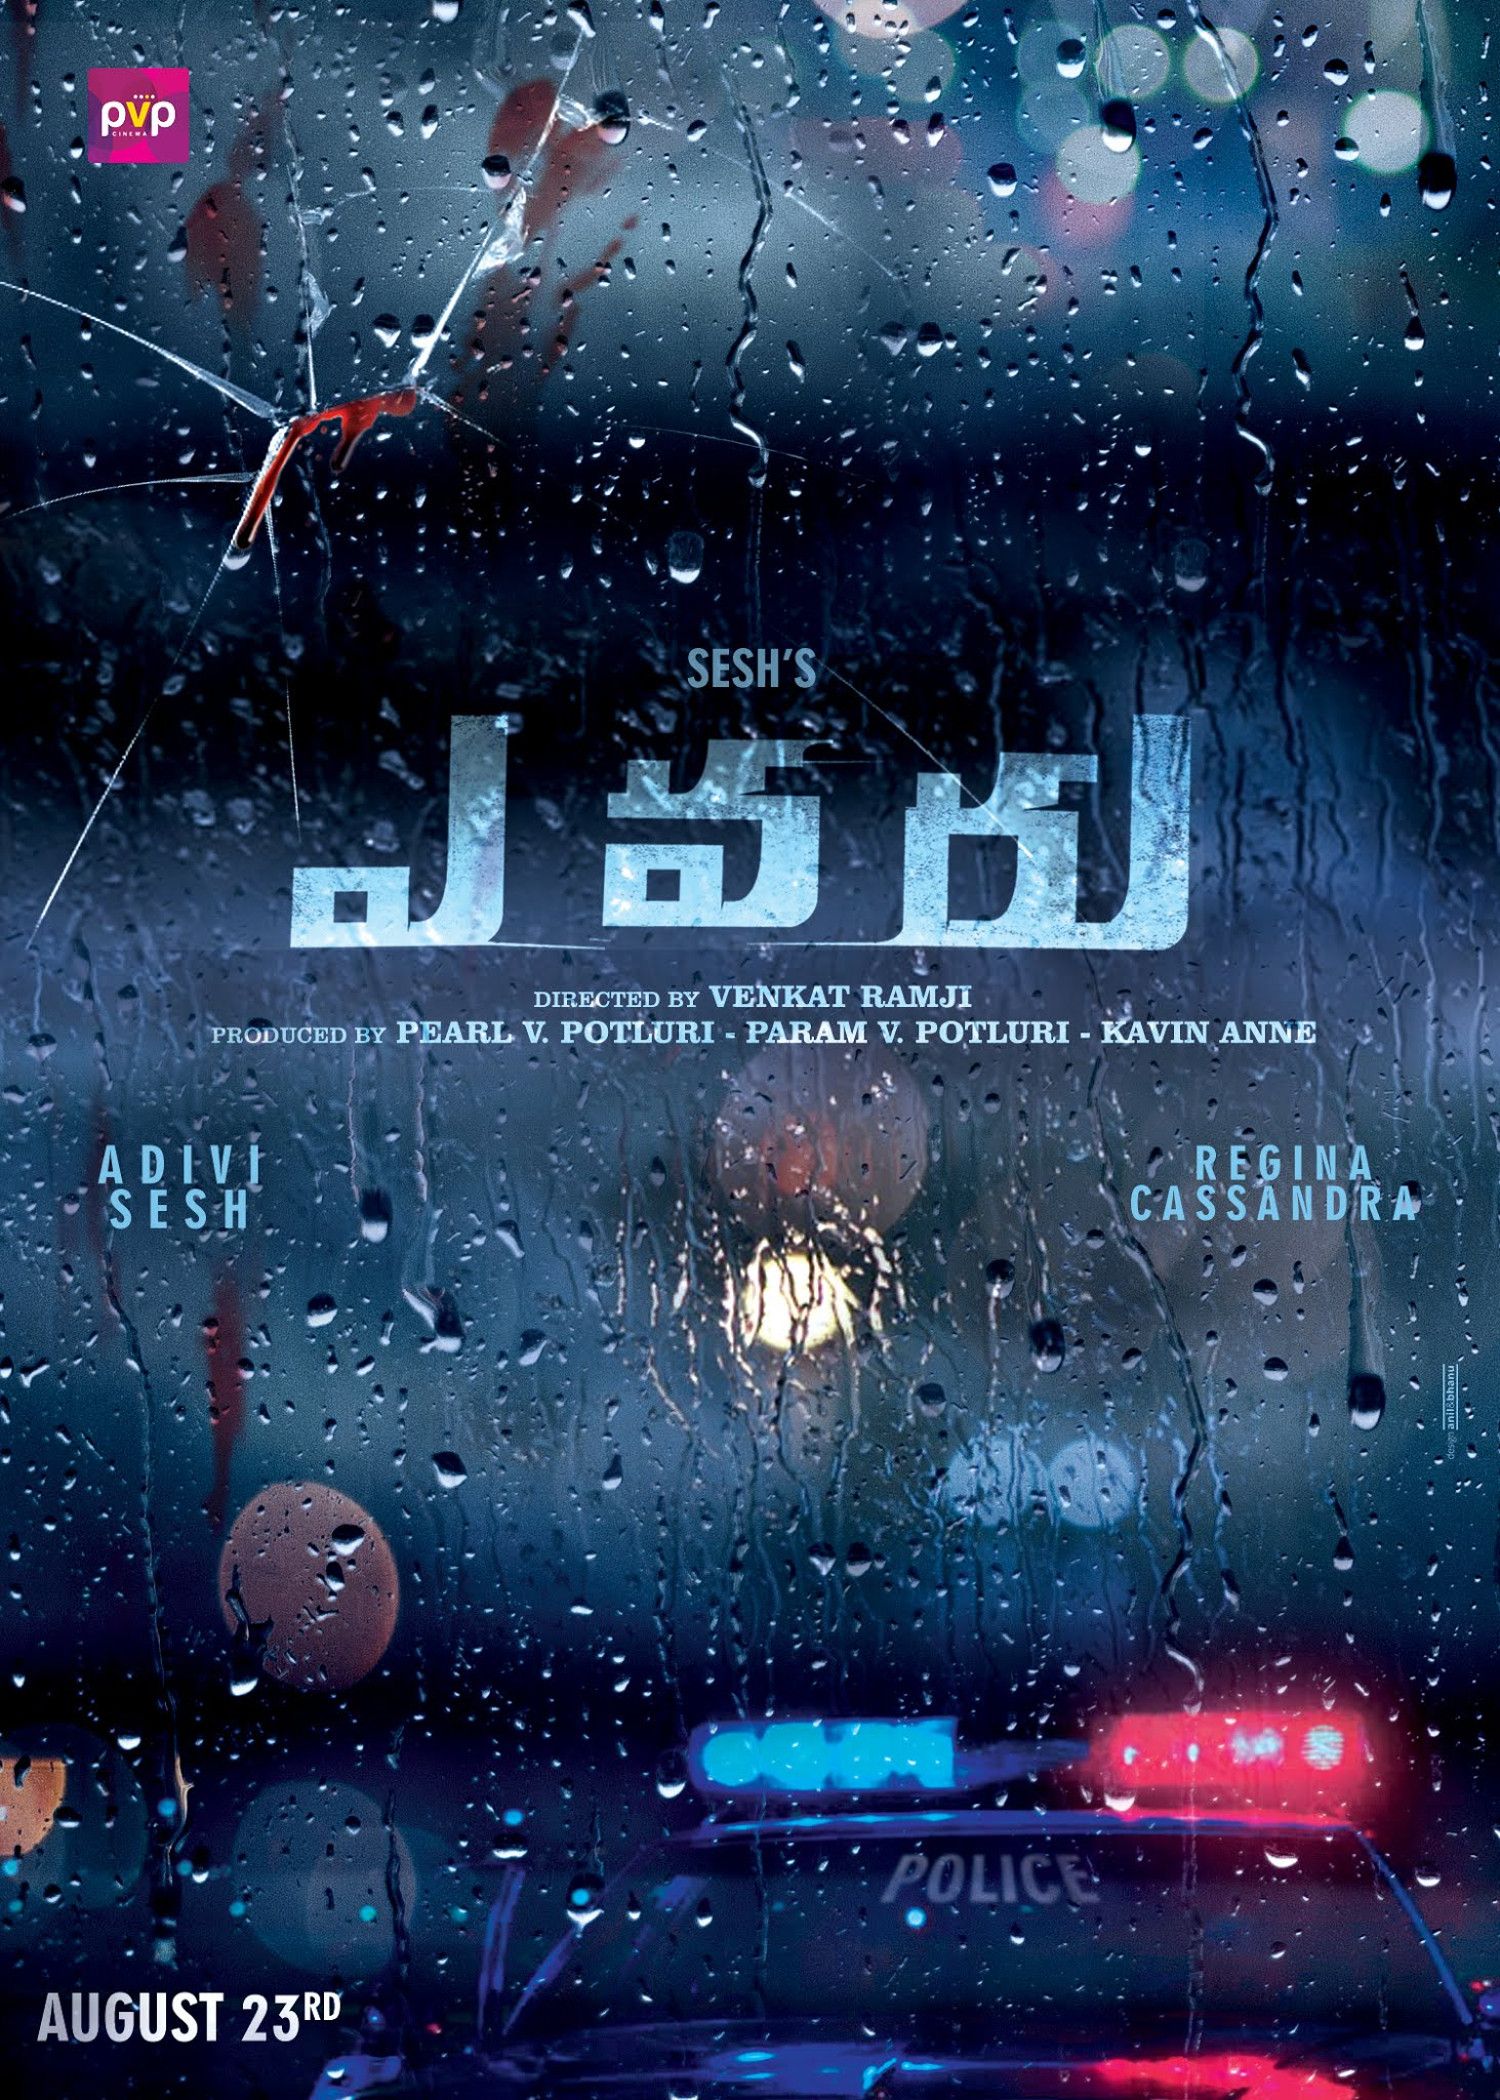 Adivi Sesh Evaru Movie Title Poster HD. New Movie Posters